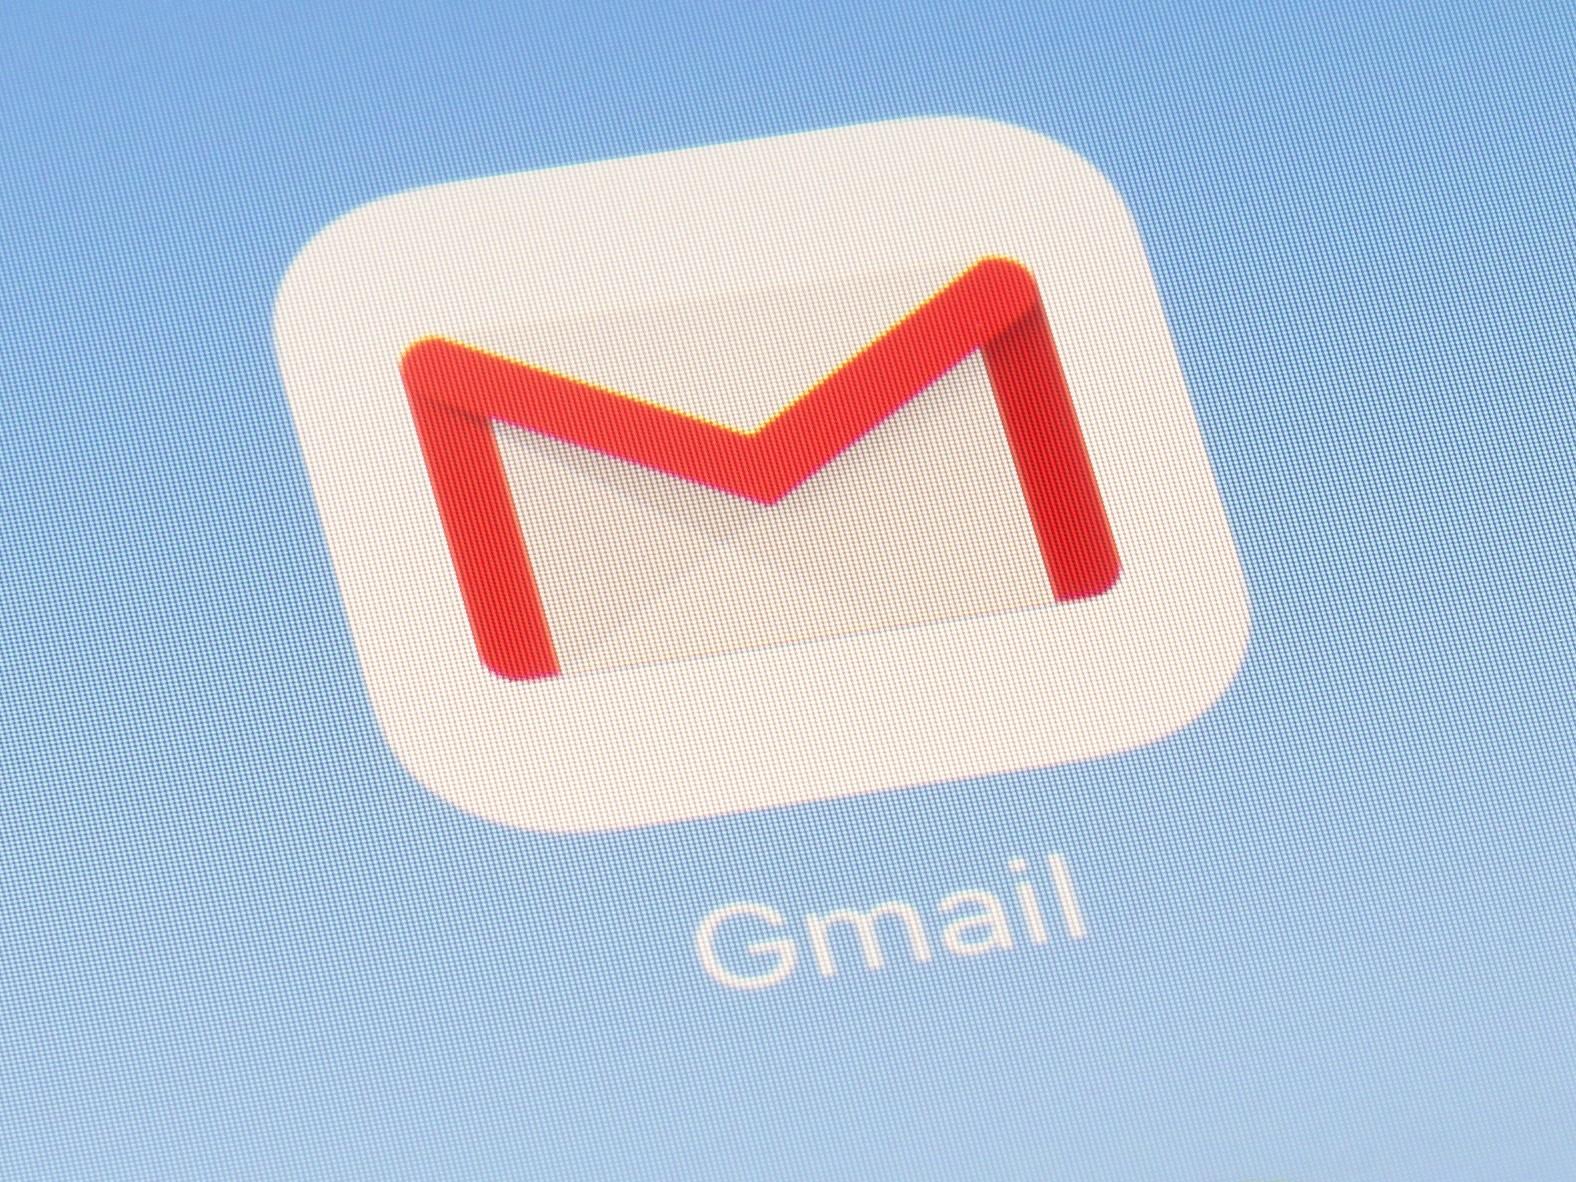 1 gmail ru. Gmail картинка. Гмайл людей. Красивая картинка gmail.